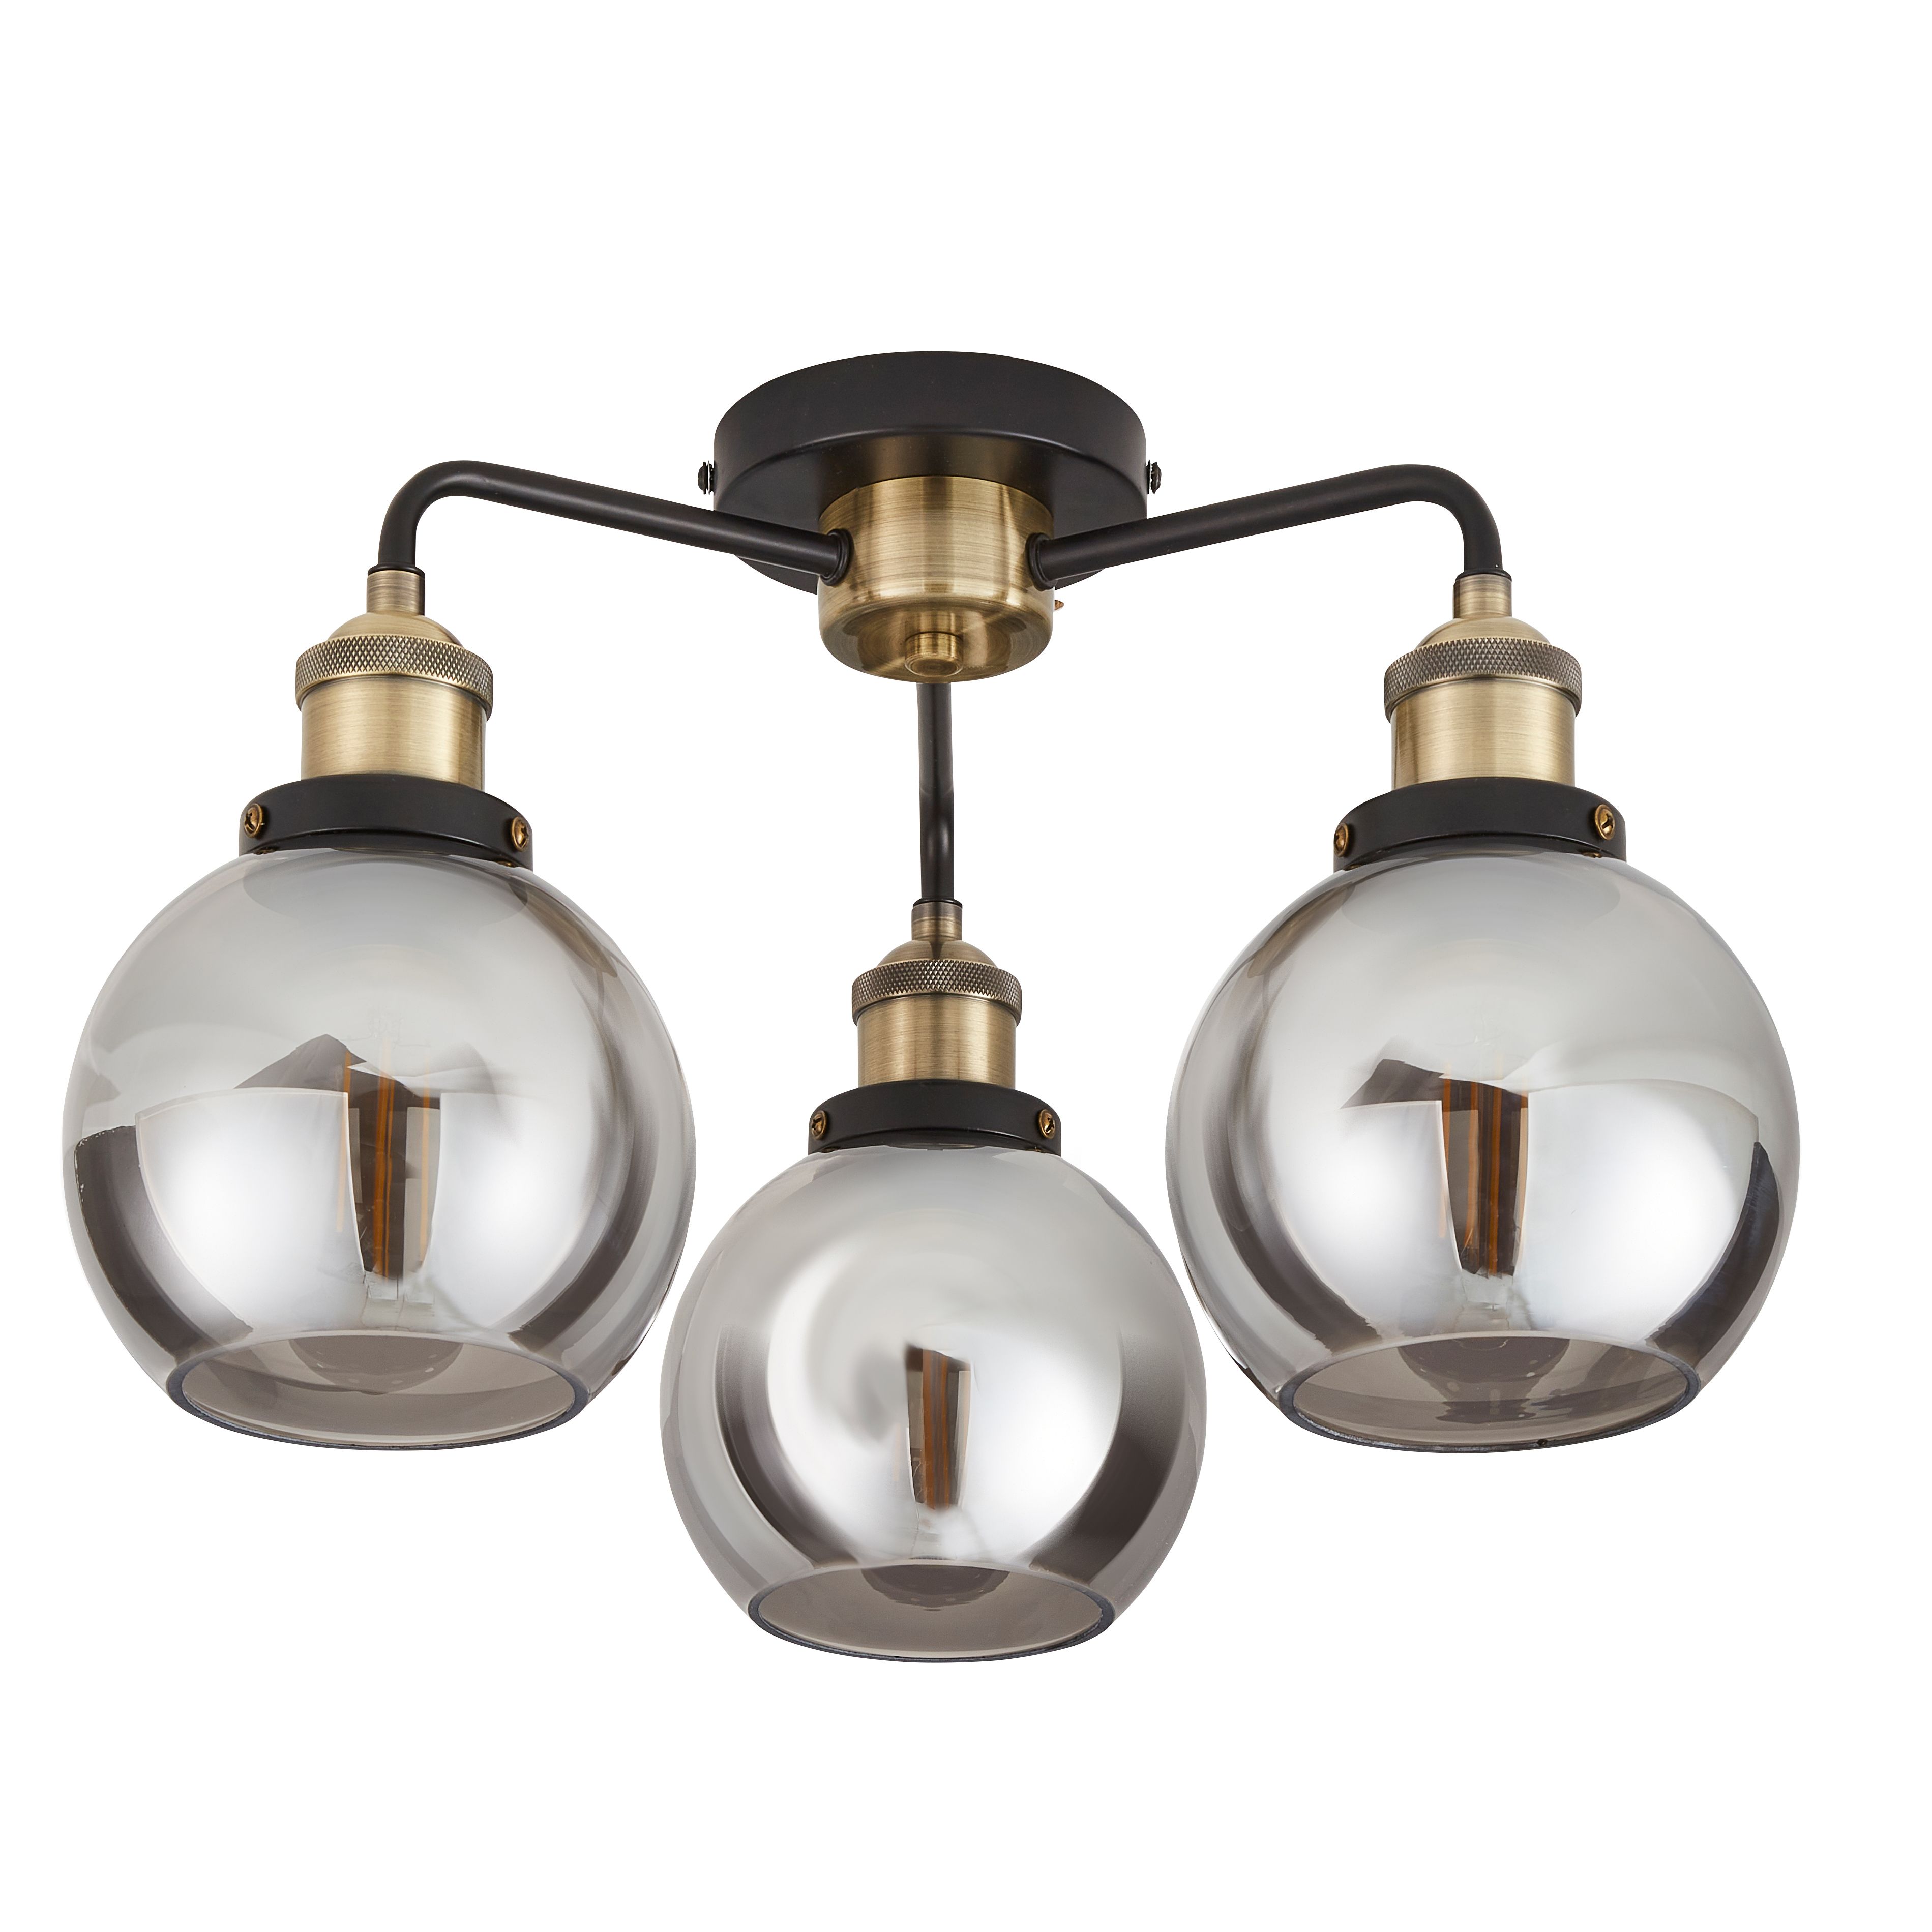 GoodHome Mebel Matt Glass & metal Antique brass effect 3 Lamp LED Ceiling light